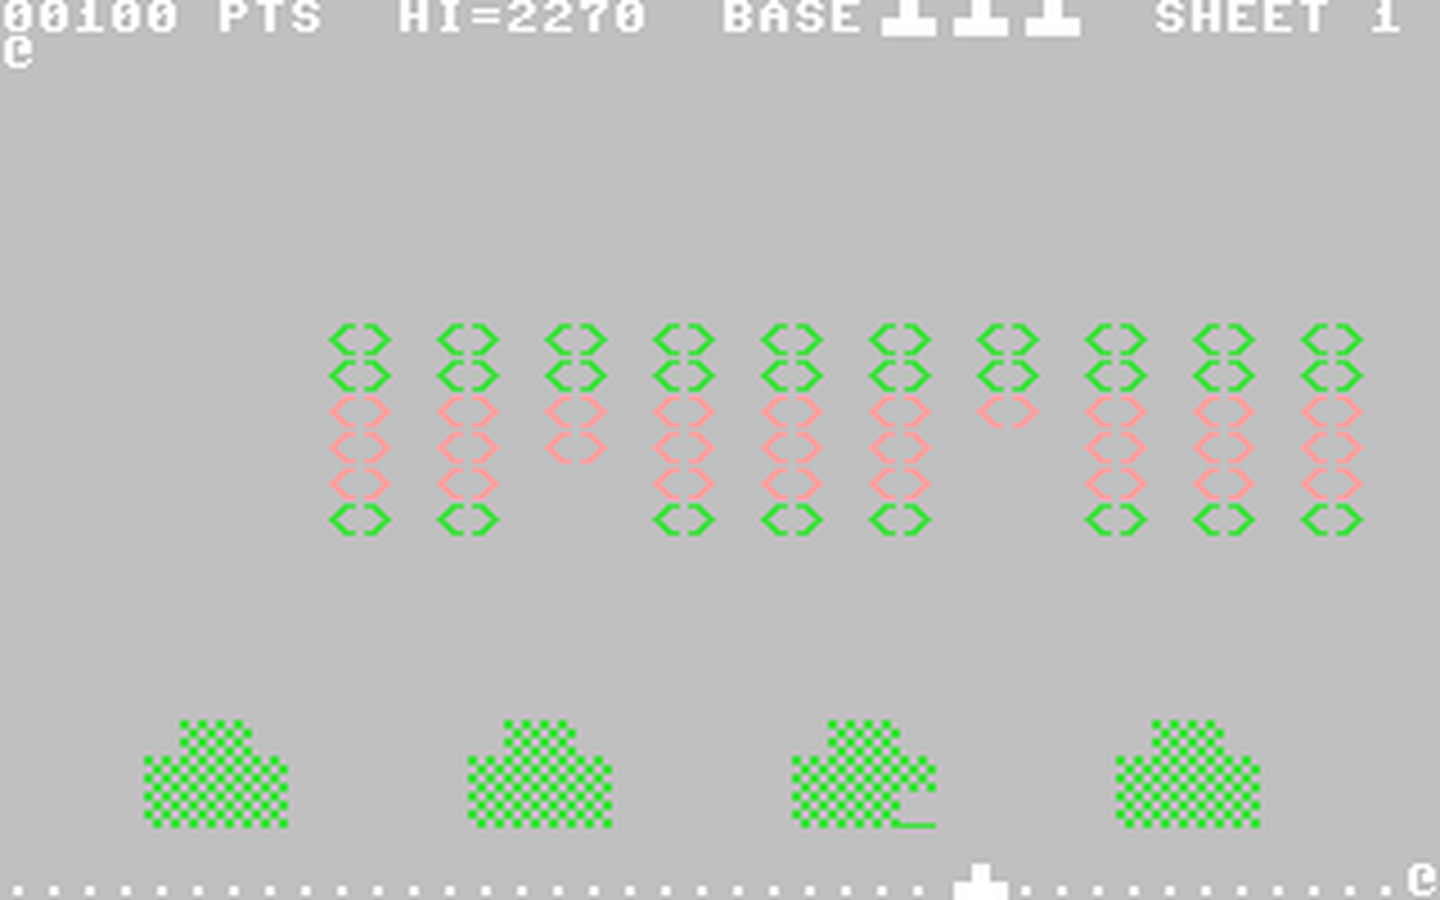 C64 GameBase Invaders Argus_Specialist_Publications_Ltd./Games_Computing 1984